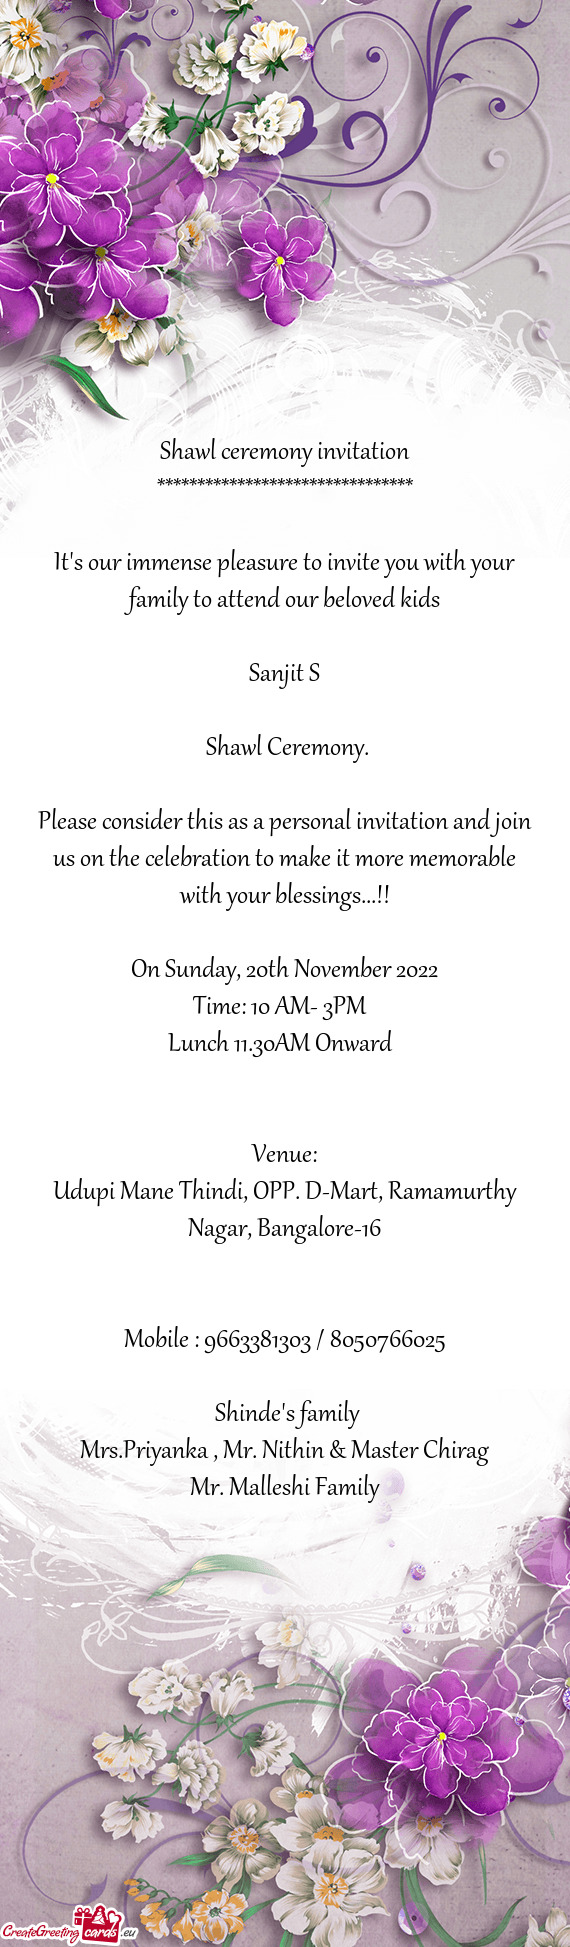 Shawl ceremony invitation